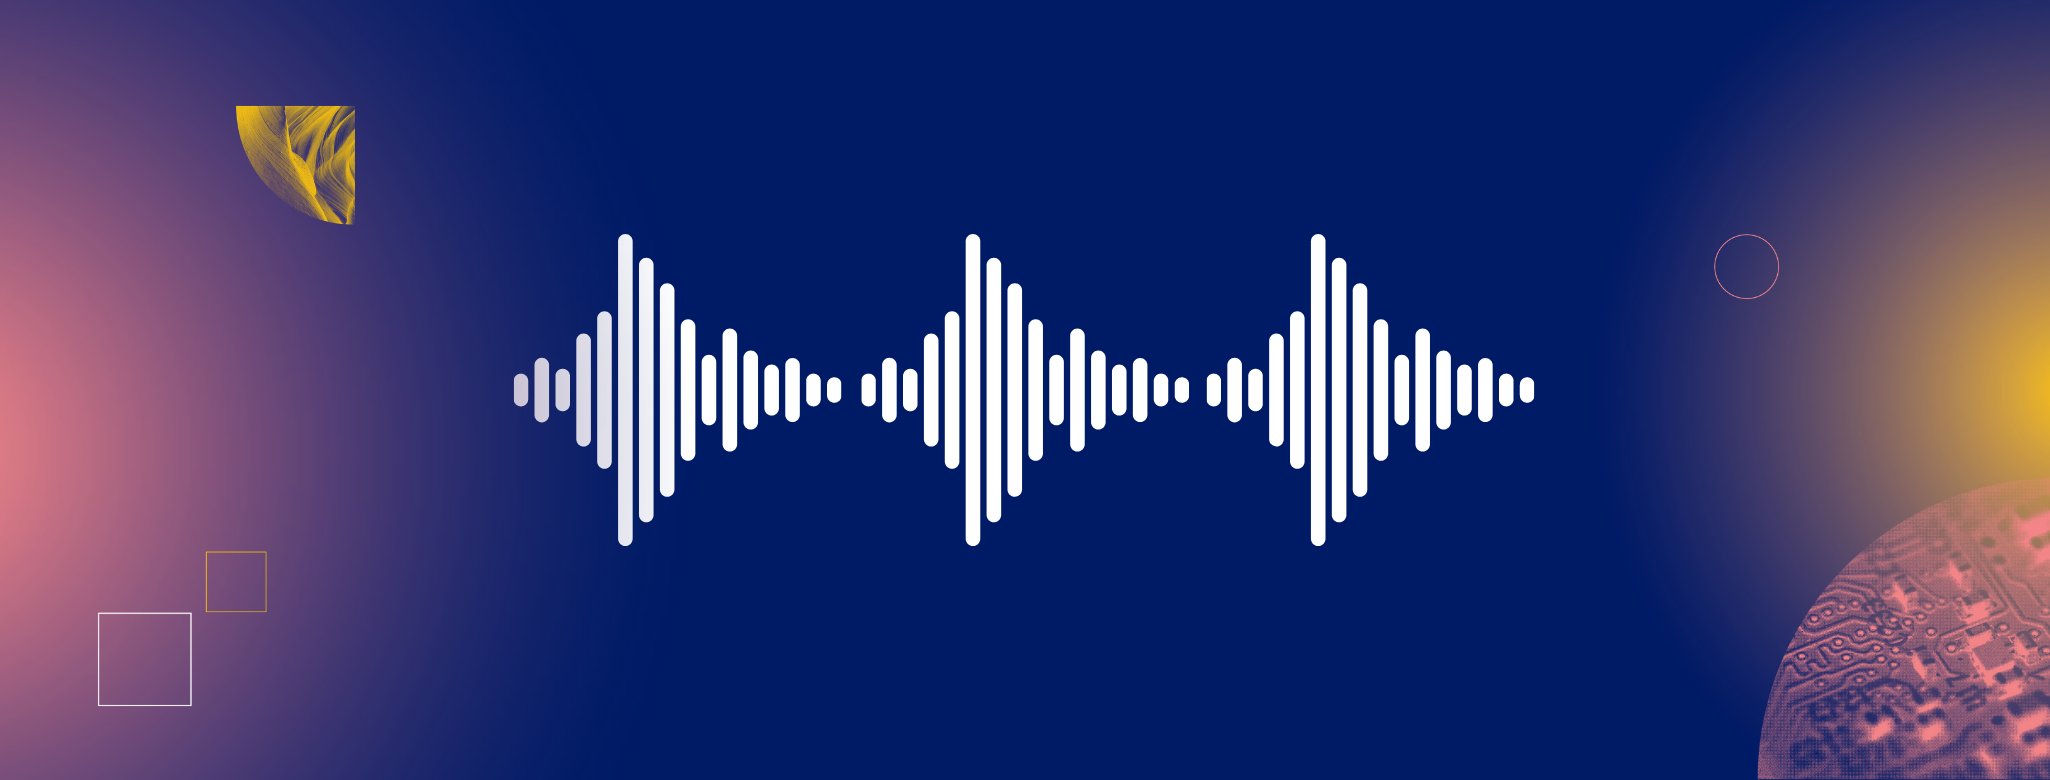 radio waves graphic